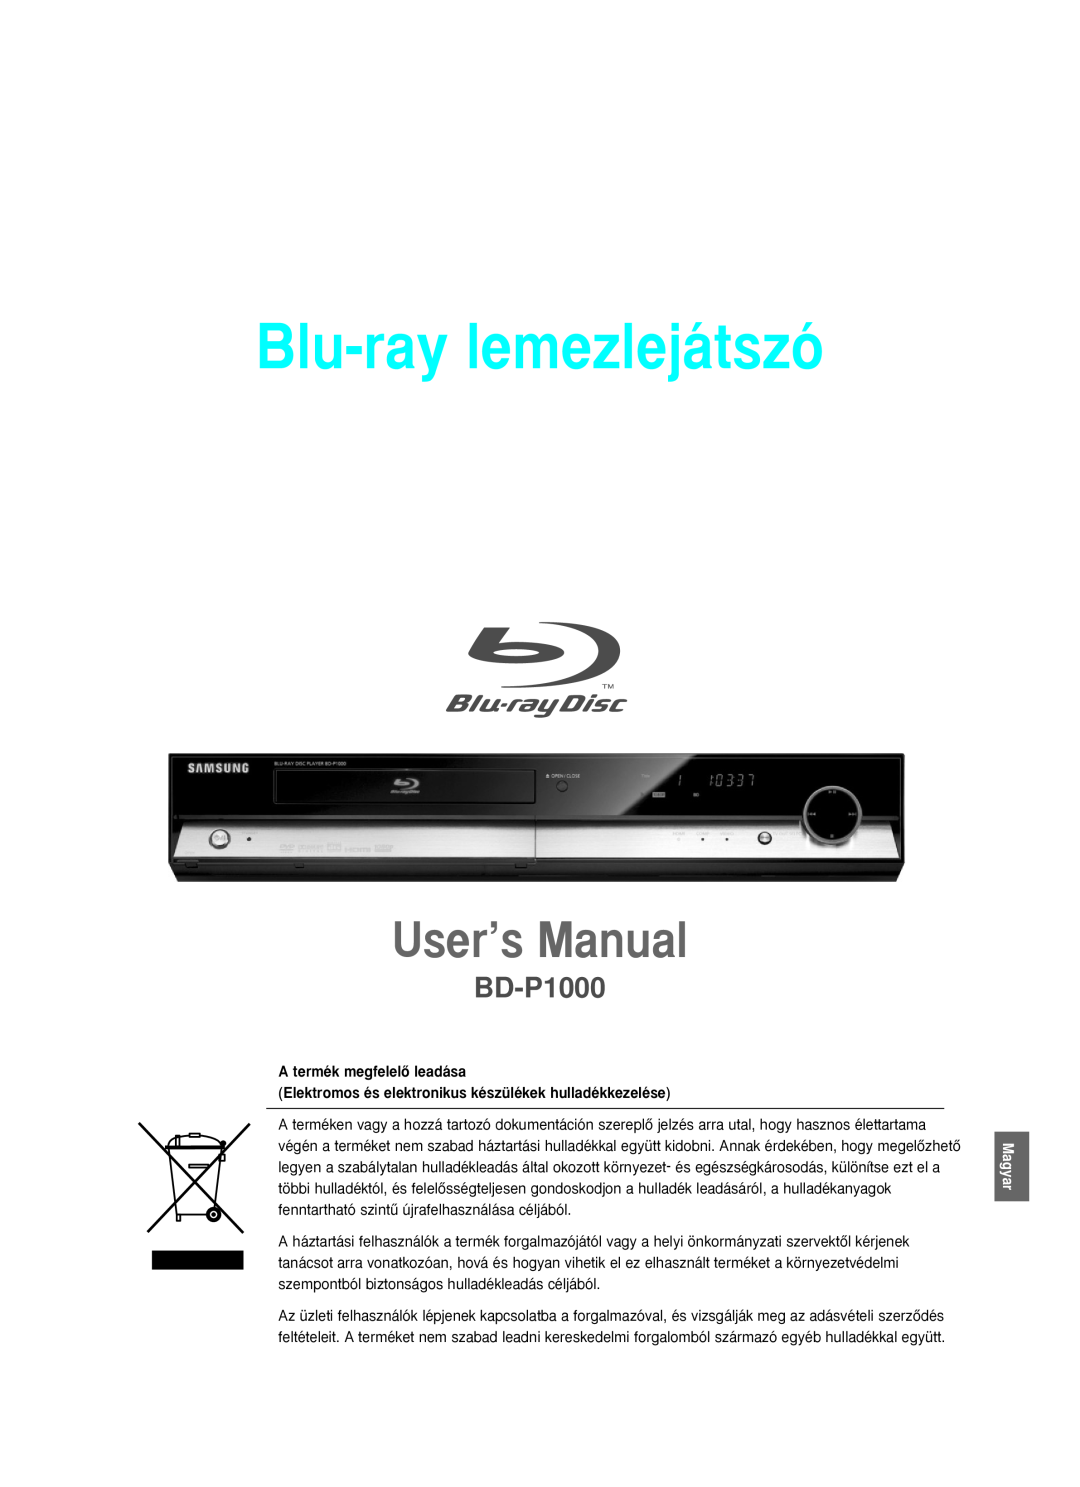 Samsung BD-P1000/XEH, BD-P1000/XEG, BD-P1000/XET manual Blu-ray lemezlejátszó, User’s Manual, A termék megfelelŒ leadása 